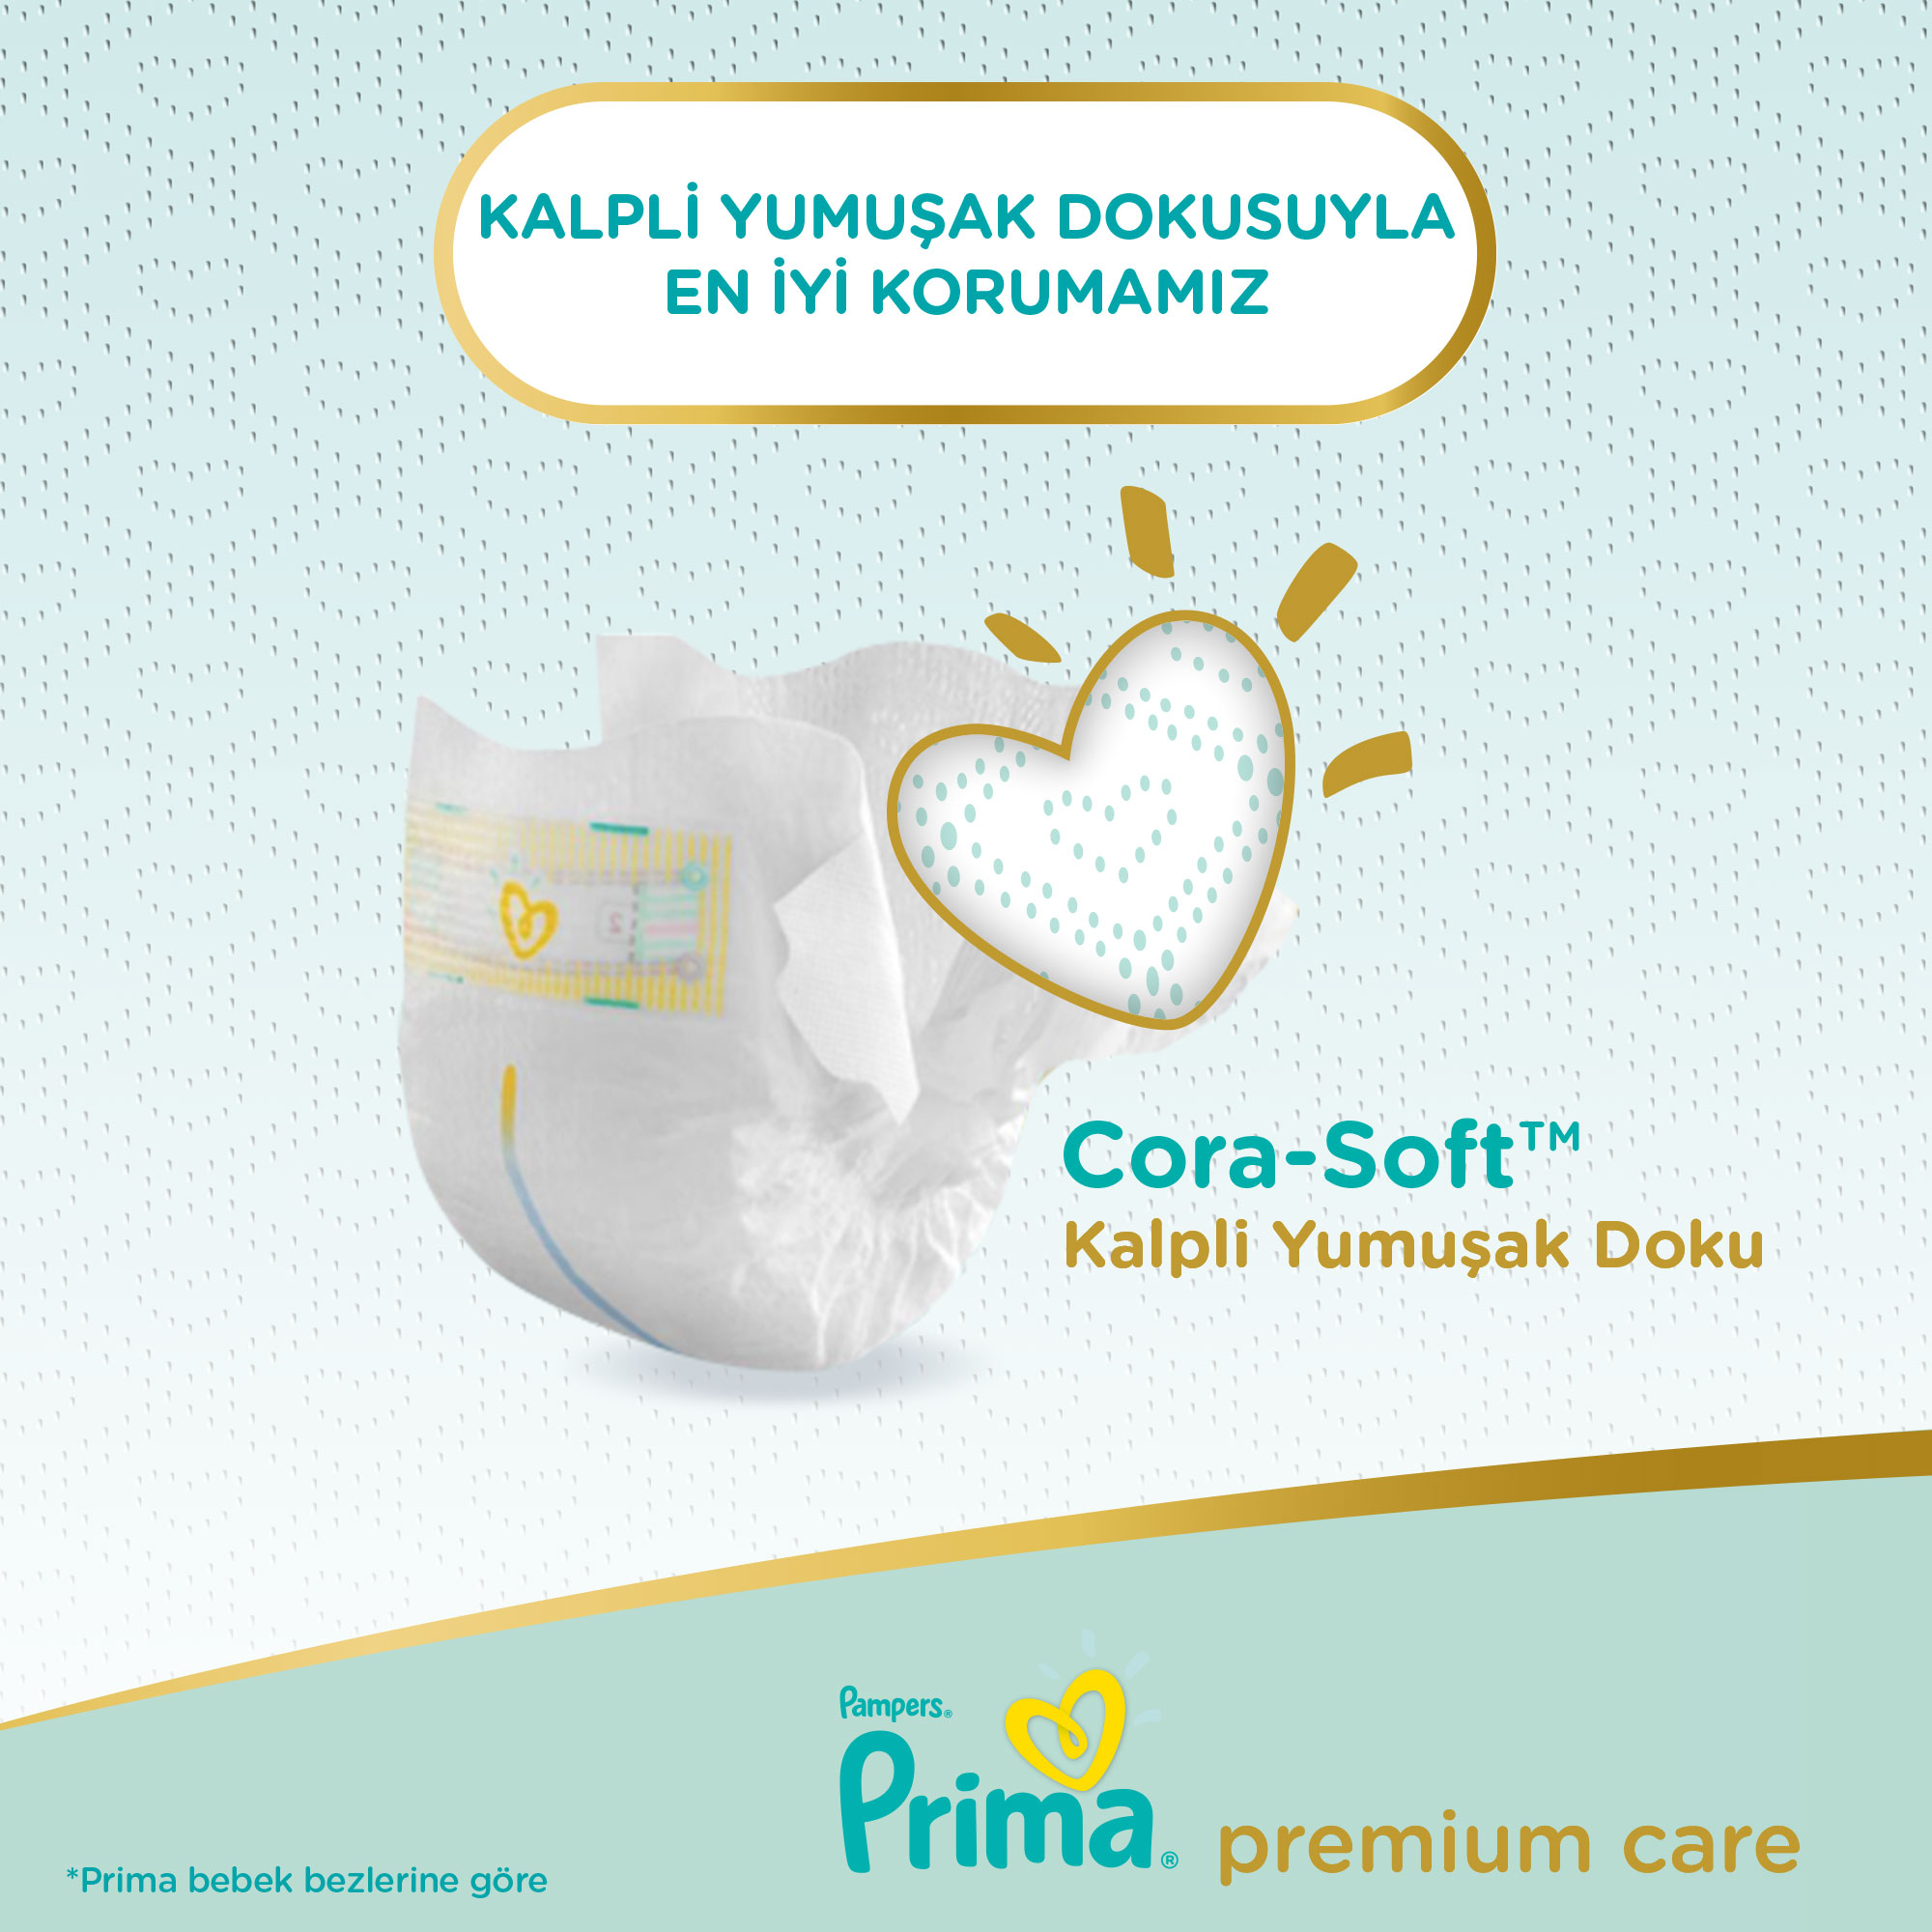 Prima Bebek Bezi Premium Care 2 Beden Jumbo Paket 60 Adet